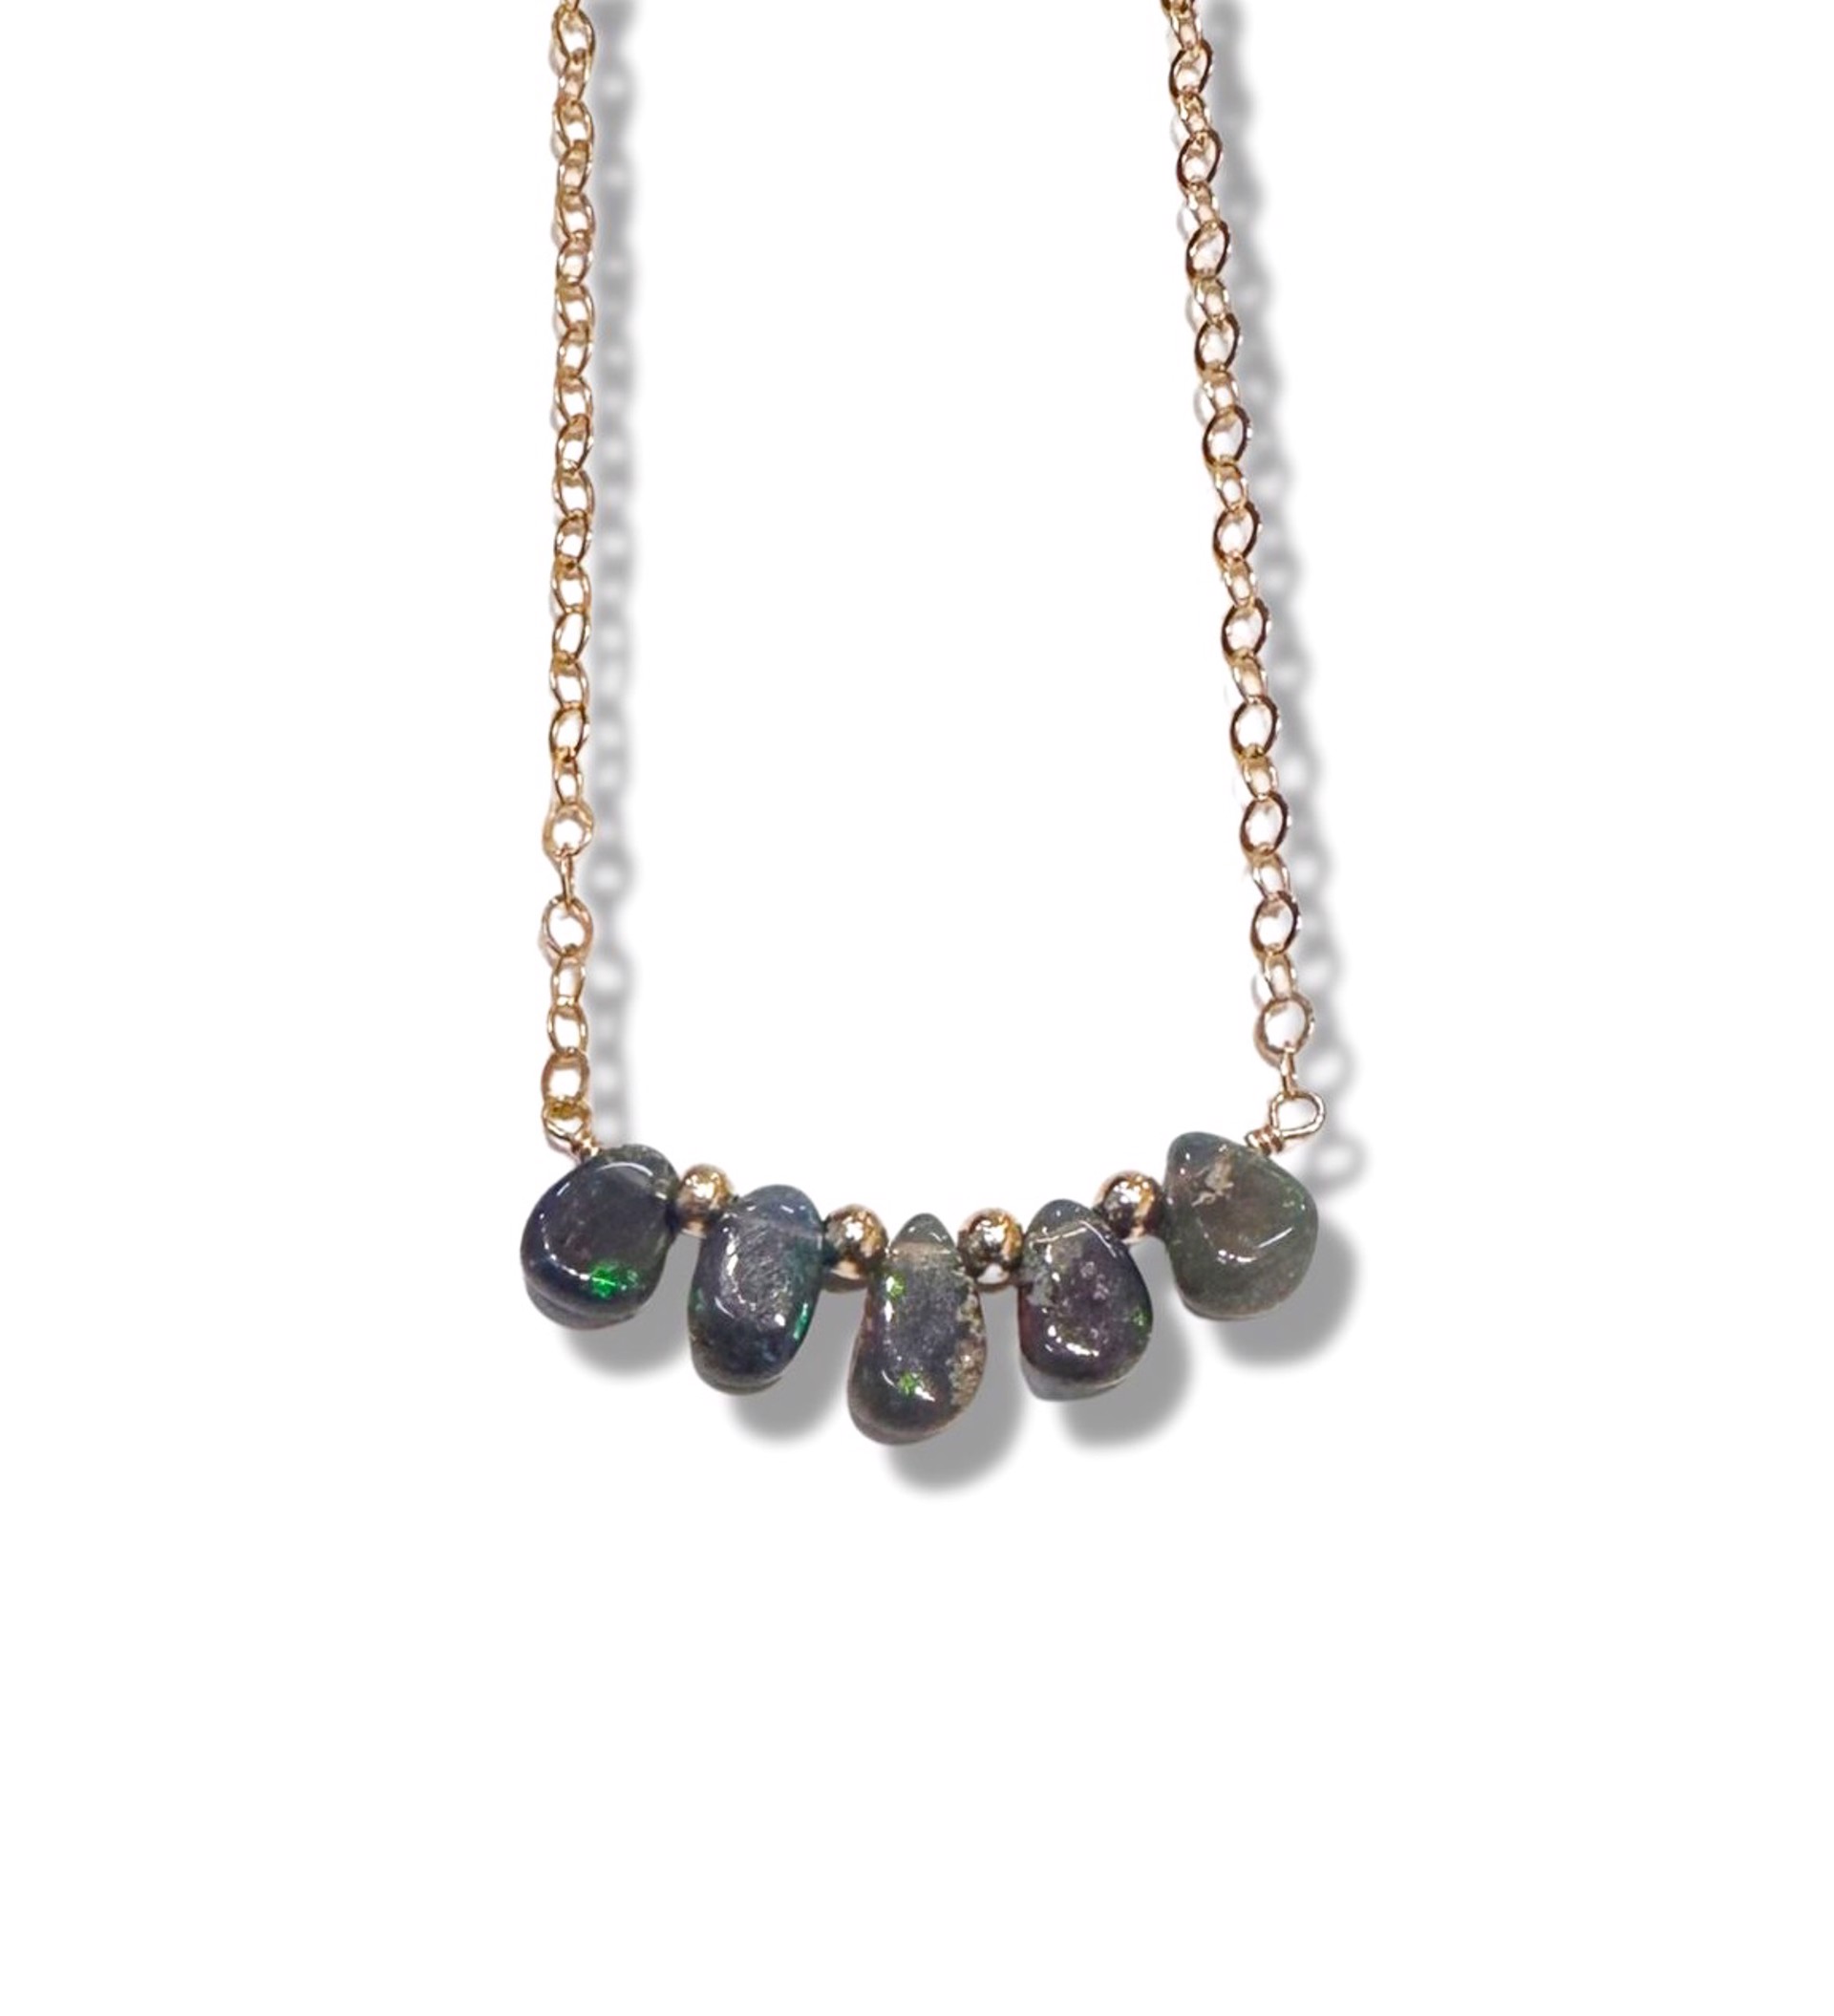 Necklace - 14K Gold Filled Black Opal 5-Stone Necklace by Julia Balestracci